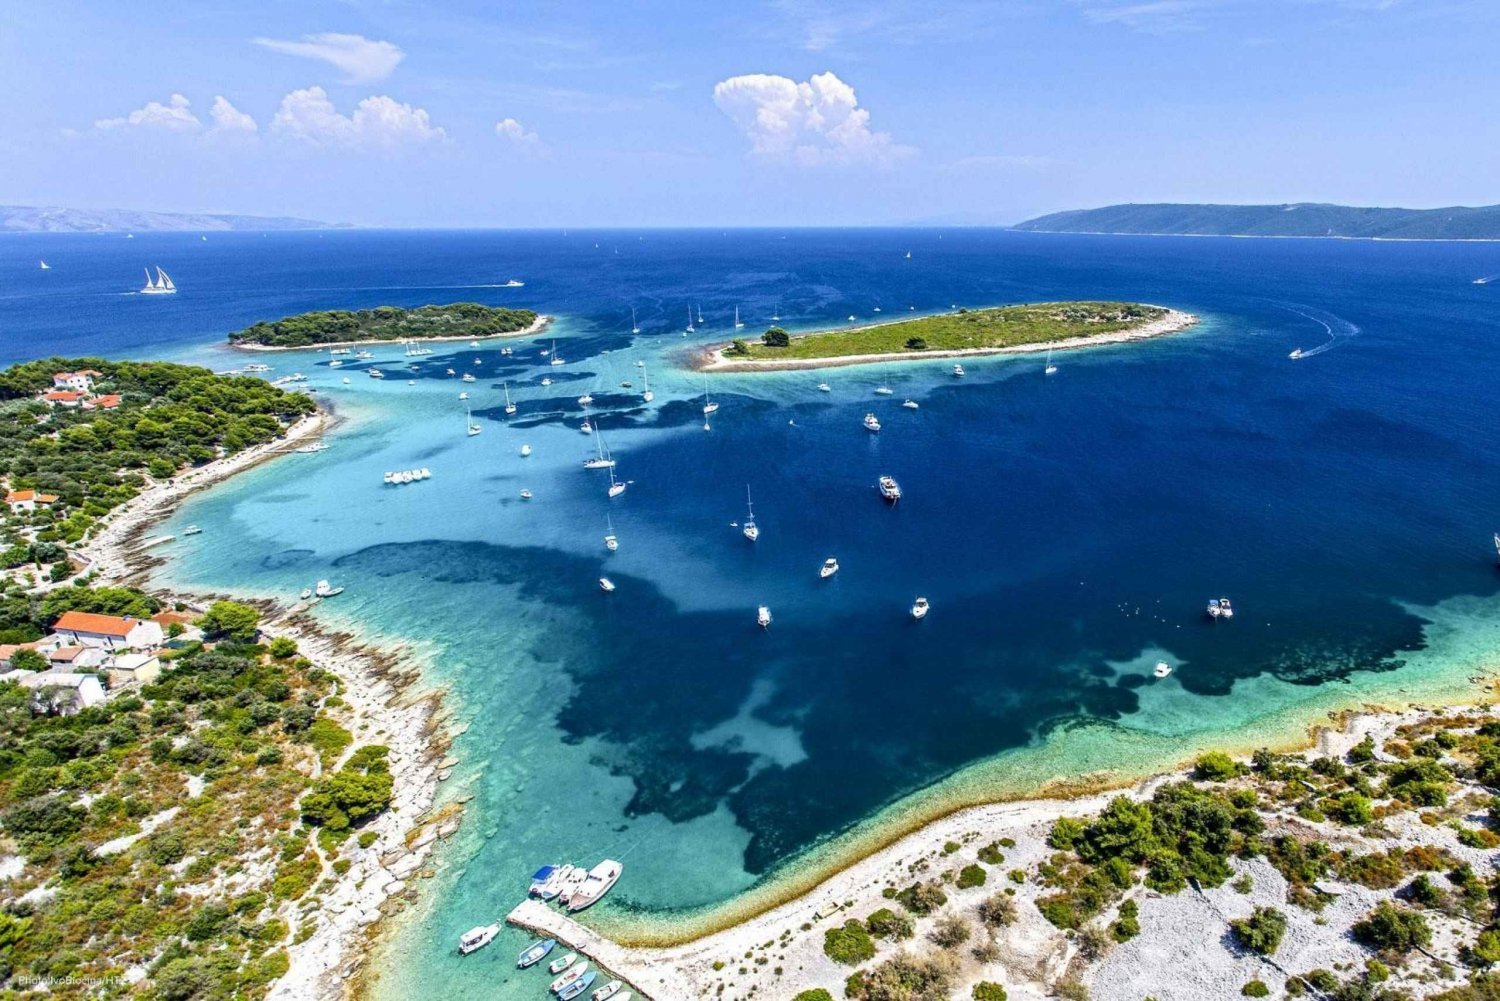 Split: Snorklingskryssning med Blå lagunen och skeppsvraket Nečujam